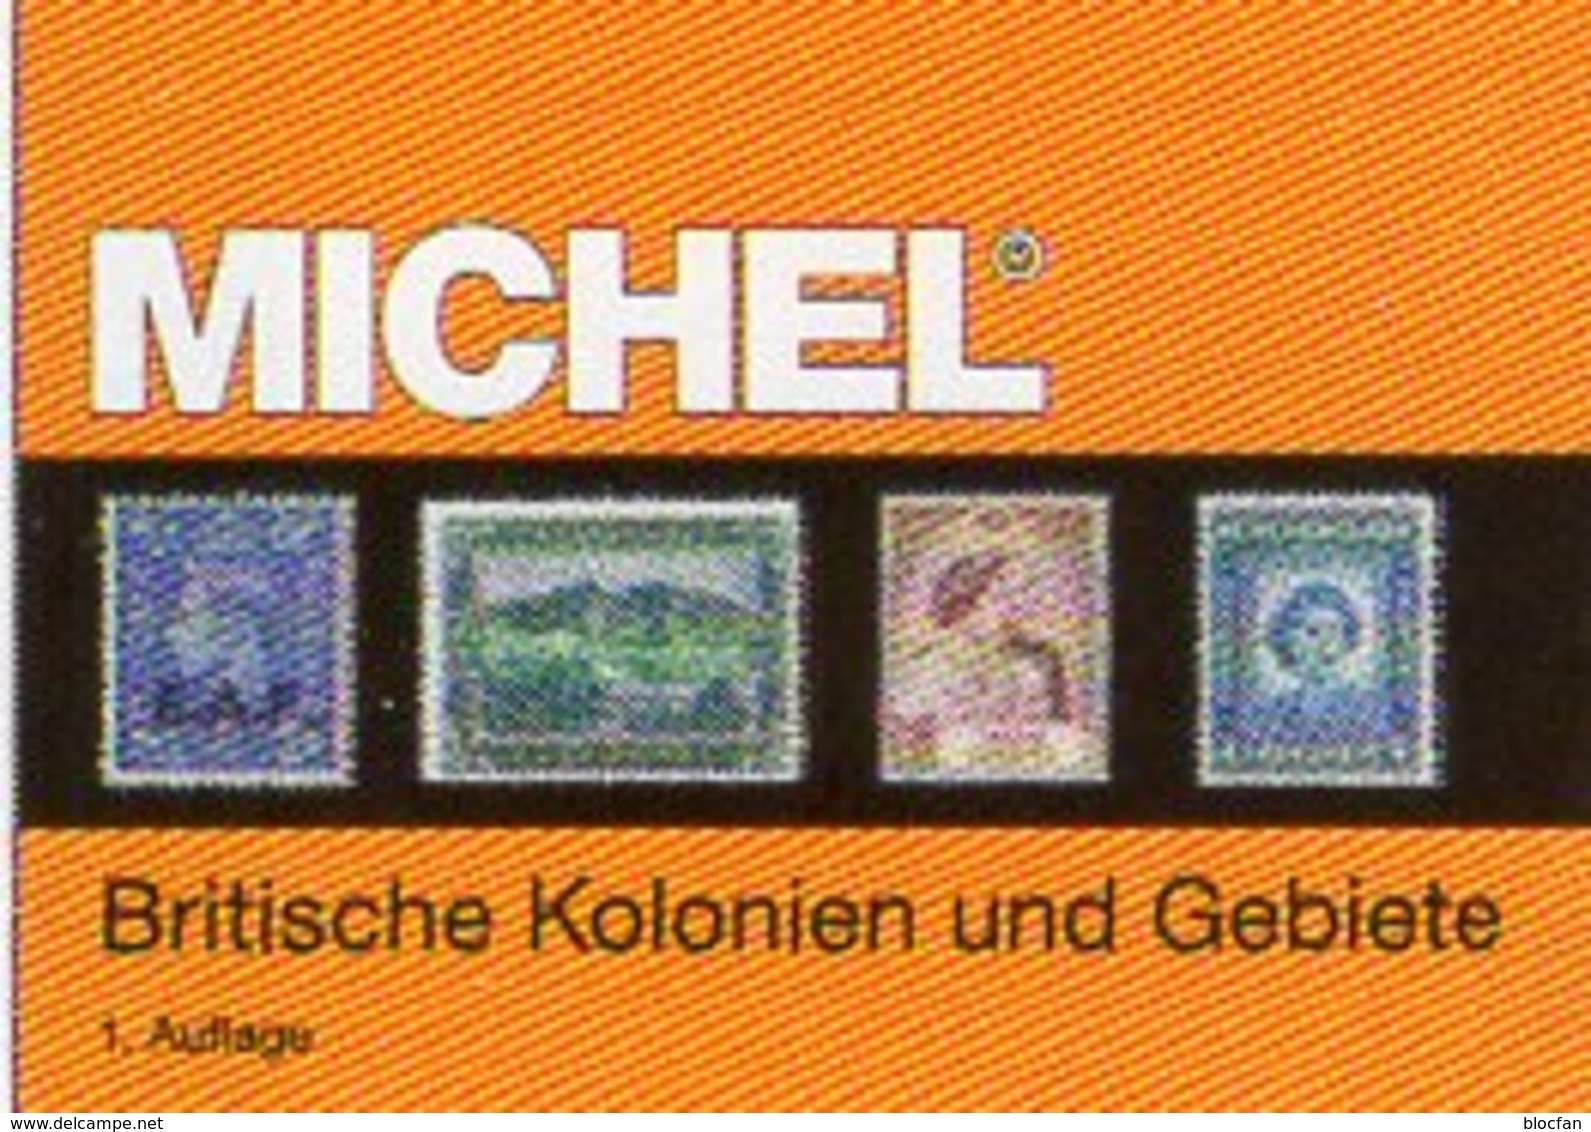 Großbritannien 1 Kolonien A-H MlCHEL 2018 New 89€ Britische Gebiete Stamp Catalogue Of Old UK ISBN978-3-95402-281-6 - Enciclopedie